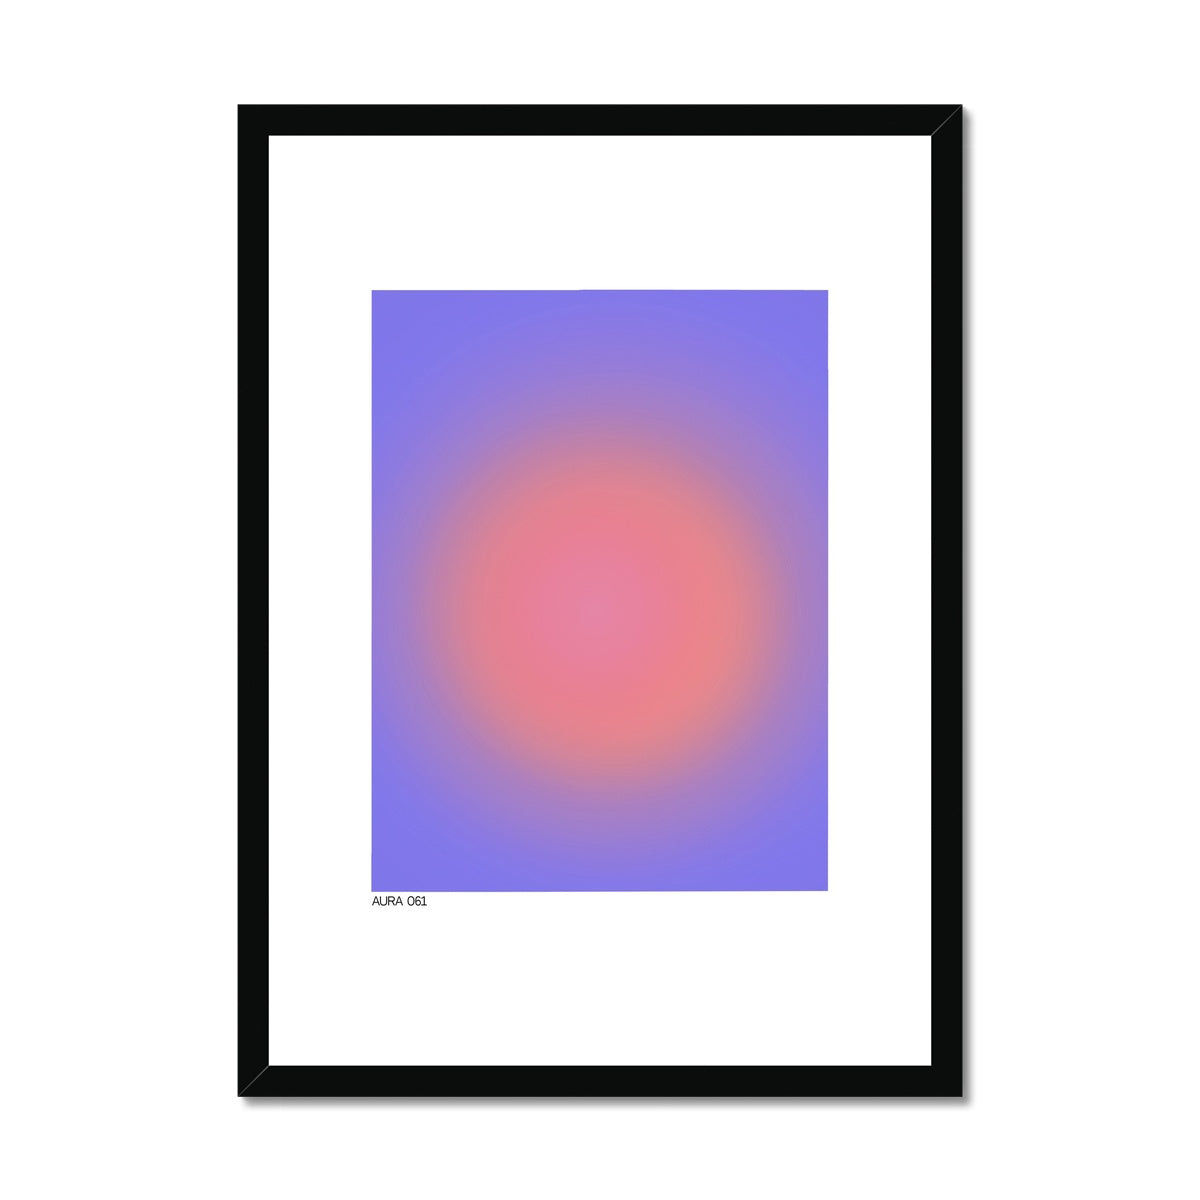 aura 061 Framed & Mounted Print